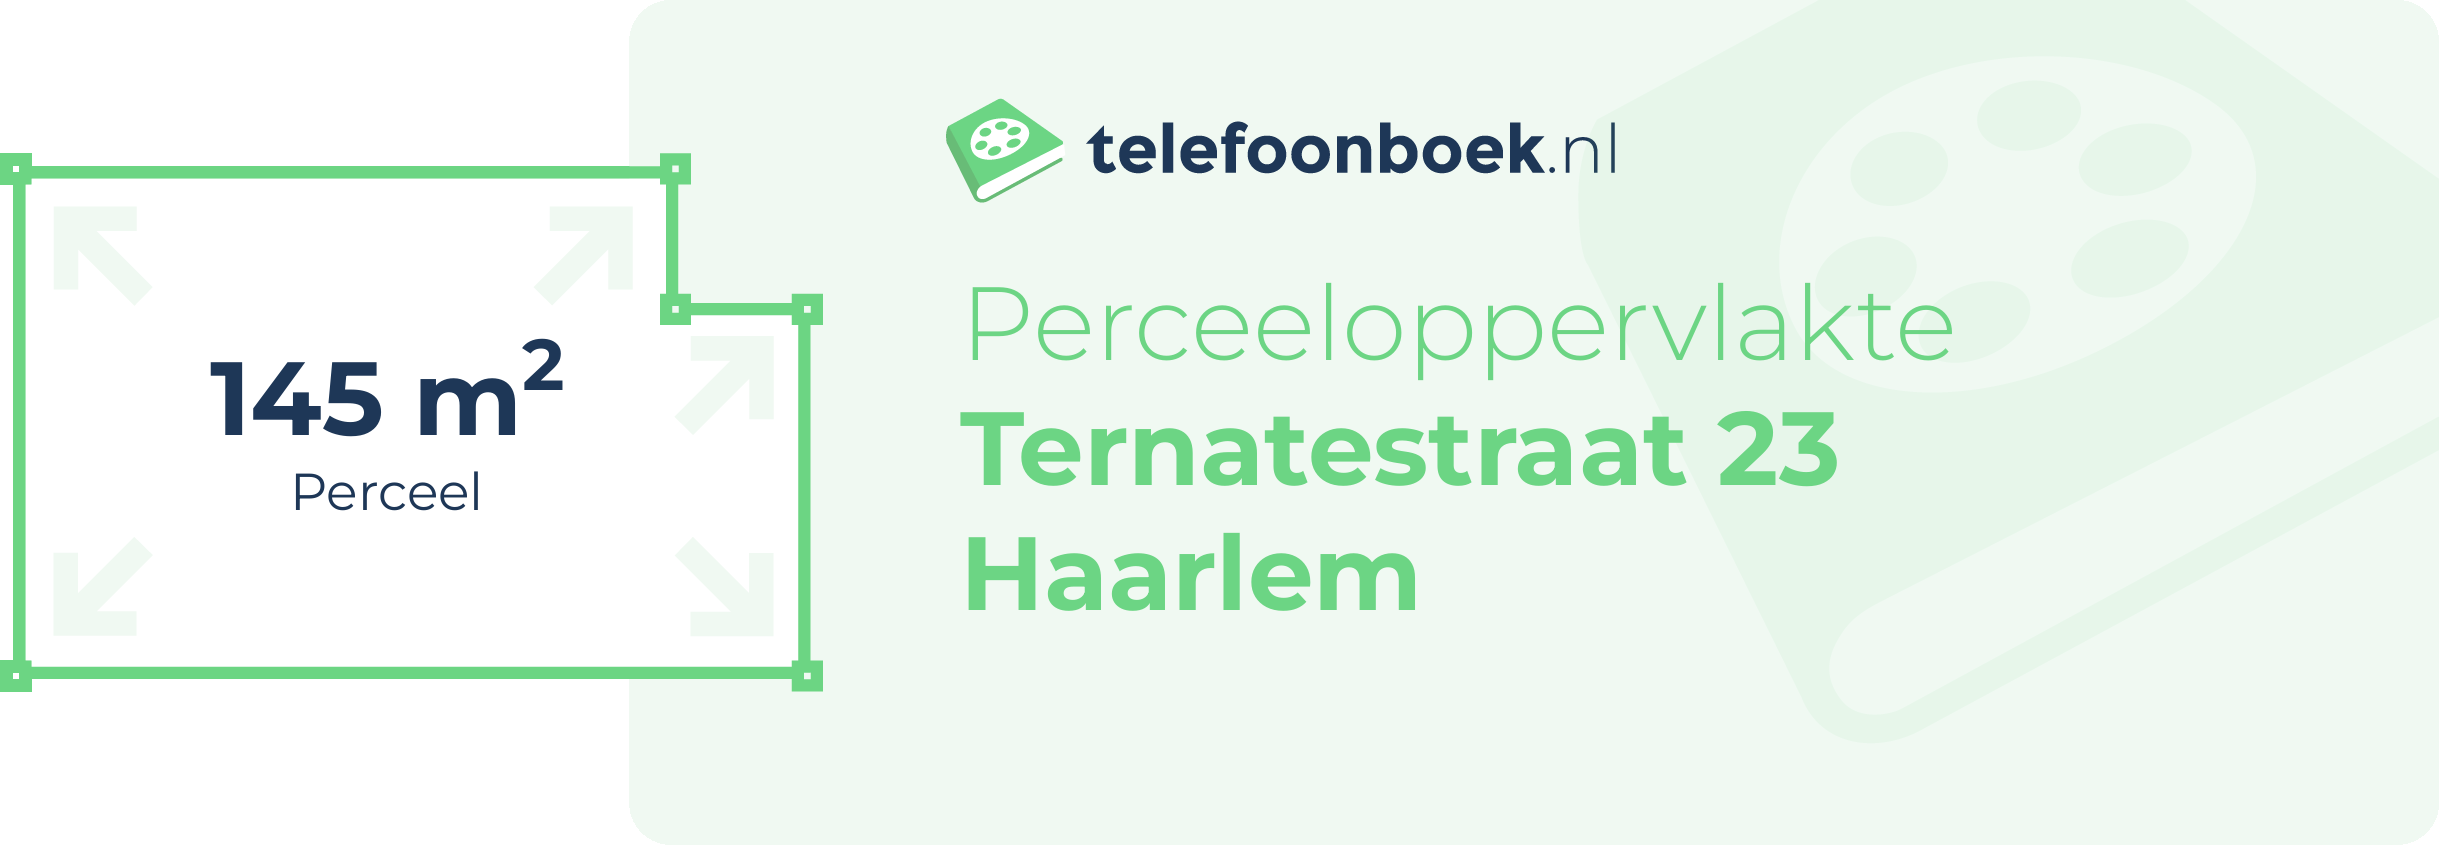 Perceeloppervlakte Ternatestraat 23 Haarlem